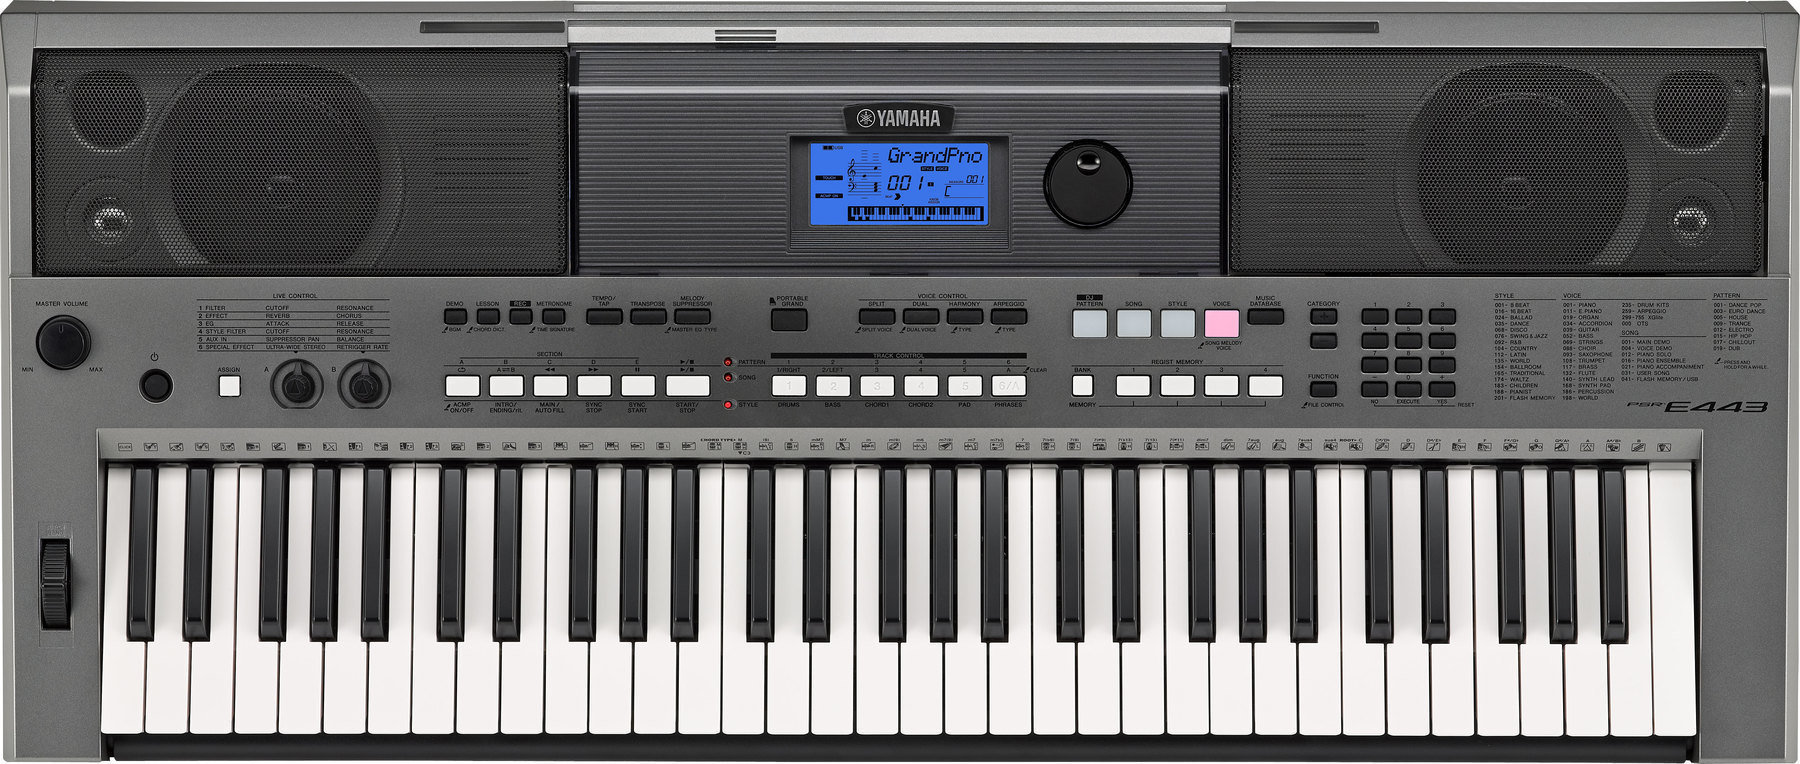 Keyboard with Touch Response Yamaha PSR E443